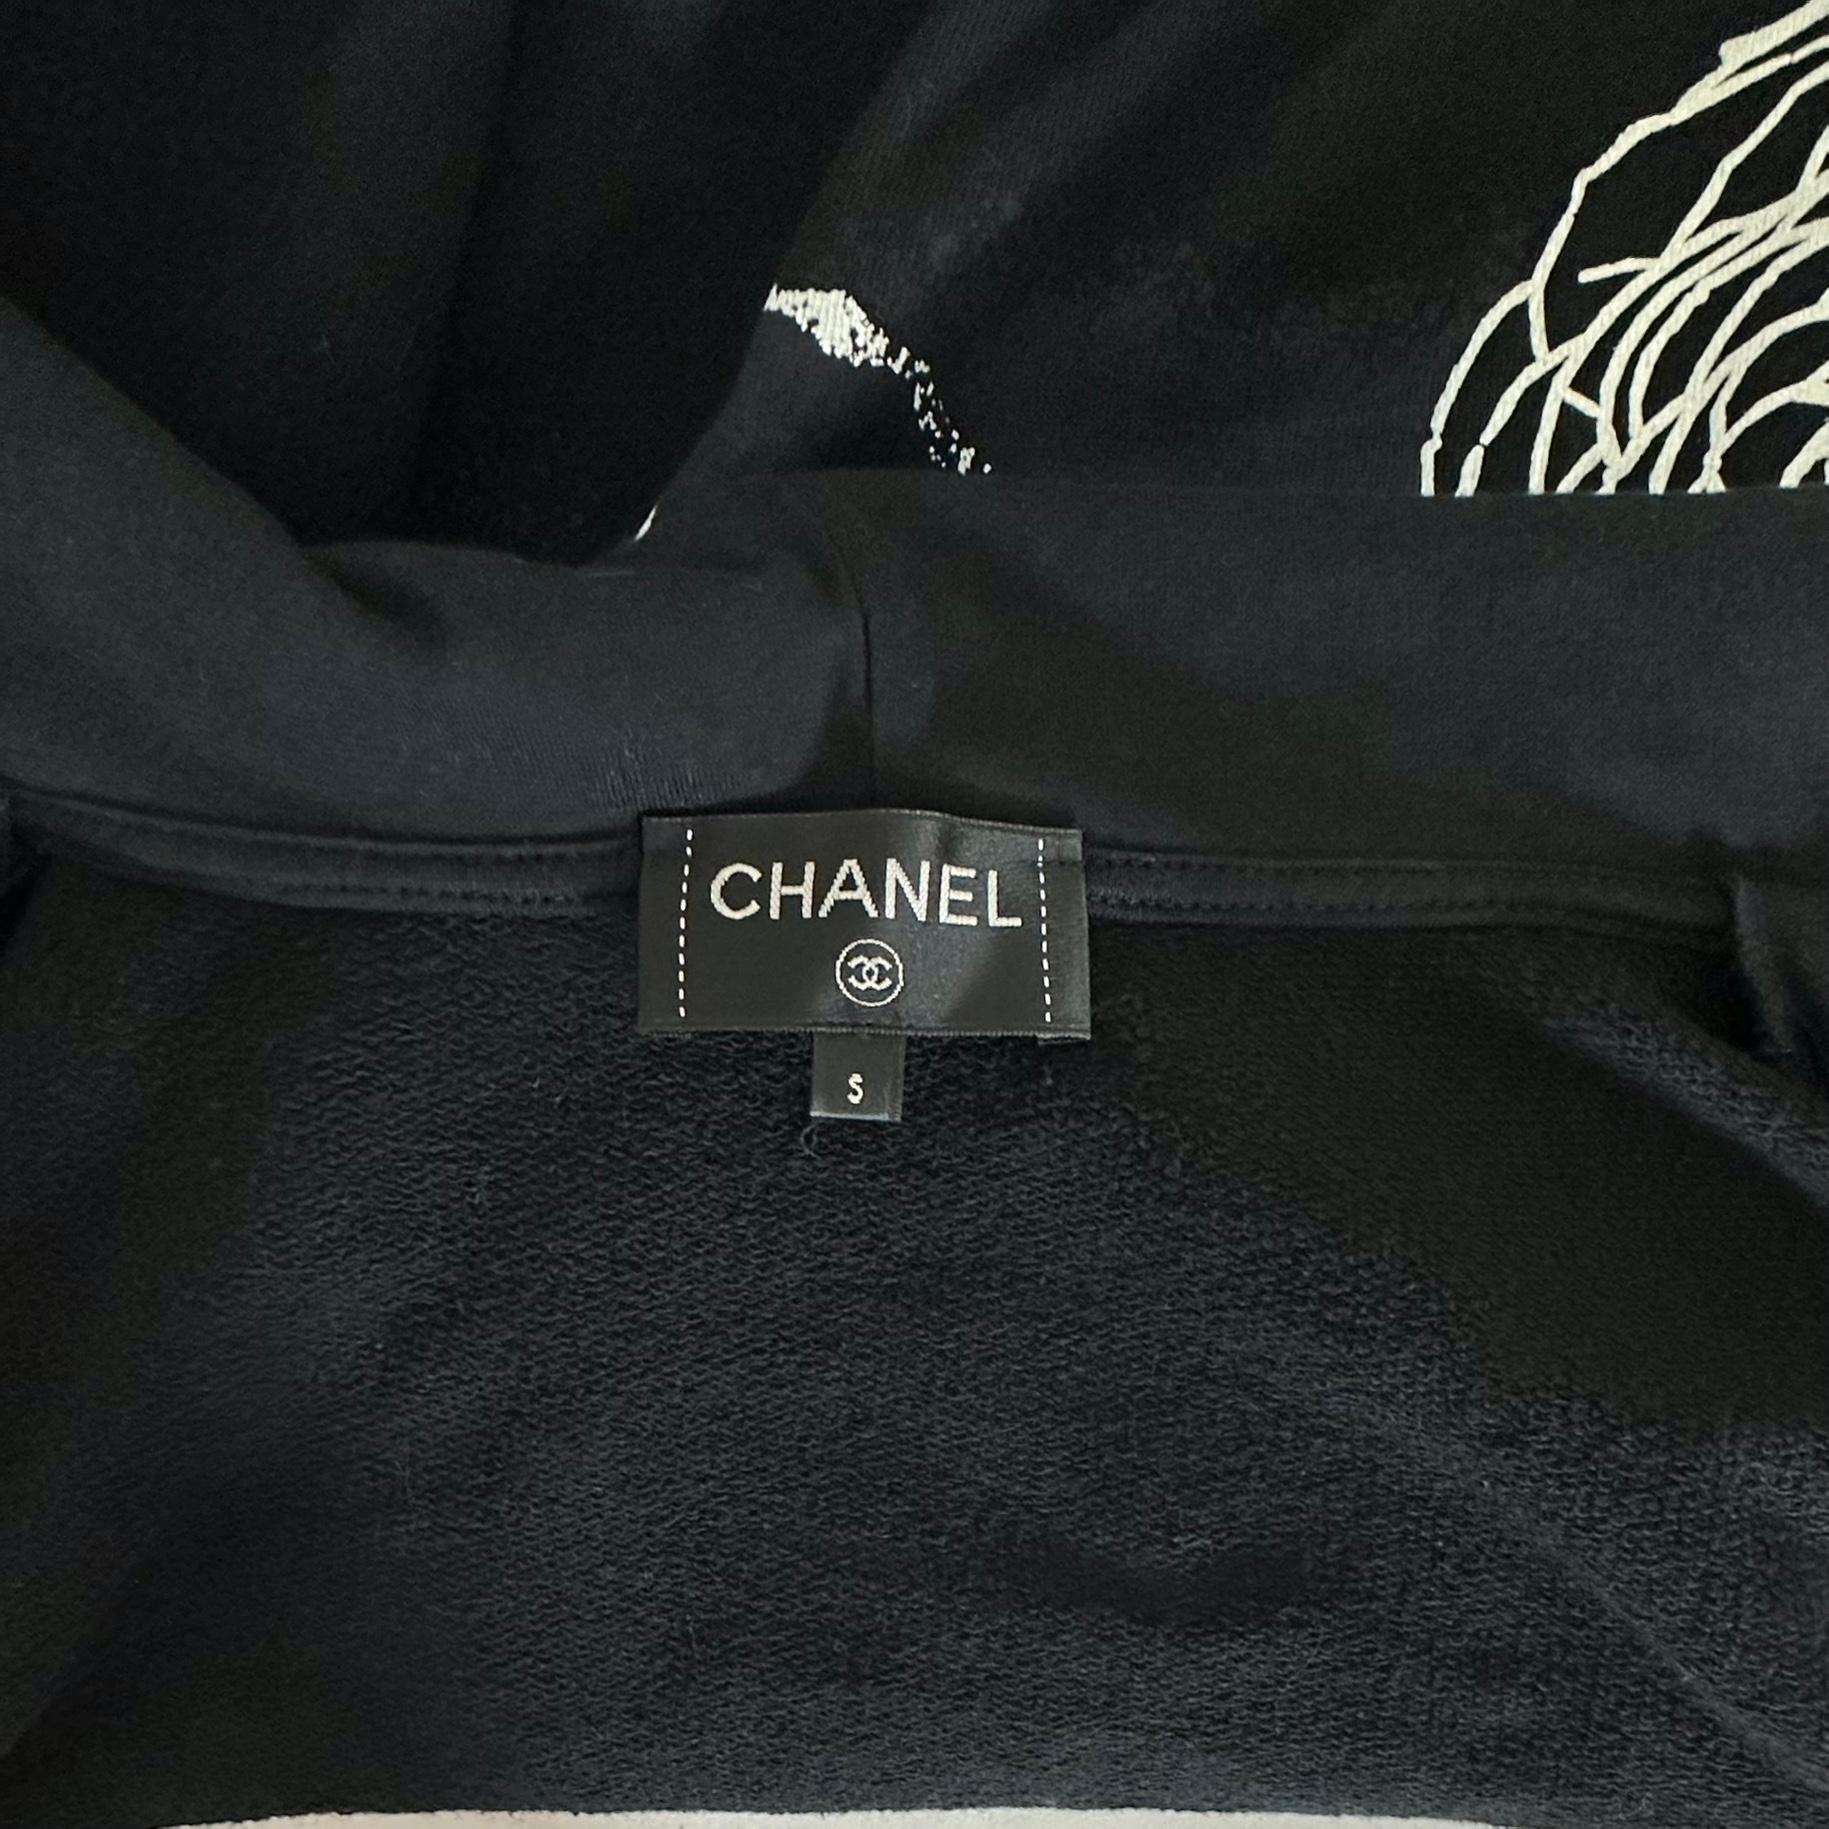 CHANEL Black Hoodie Jacket Cardigan Sweater Long Sleeve Graphic White Zipper S 1